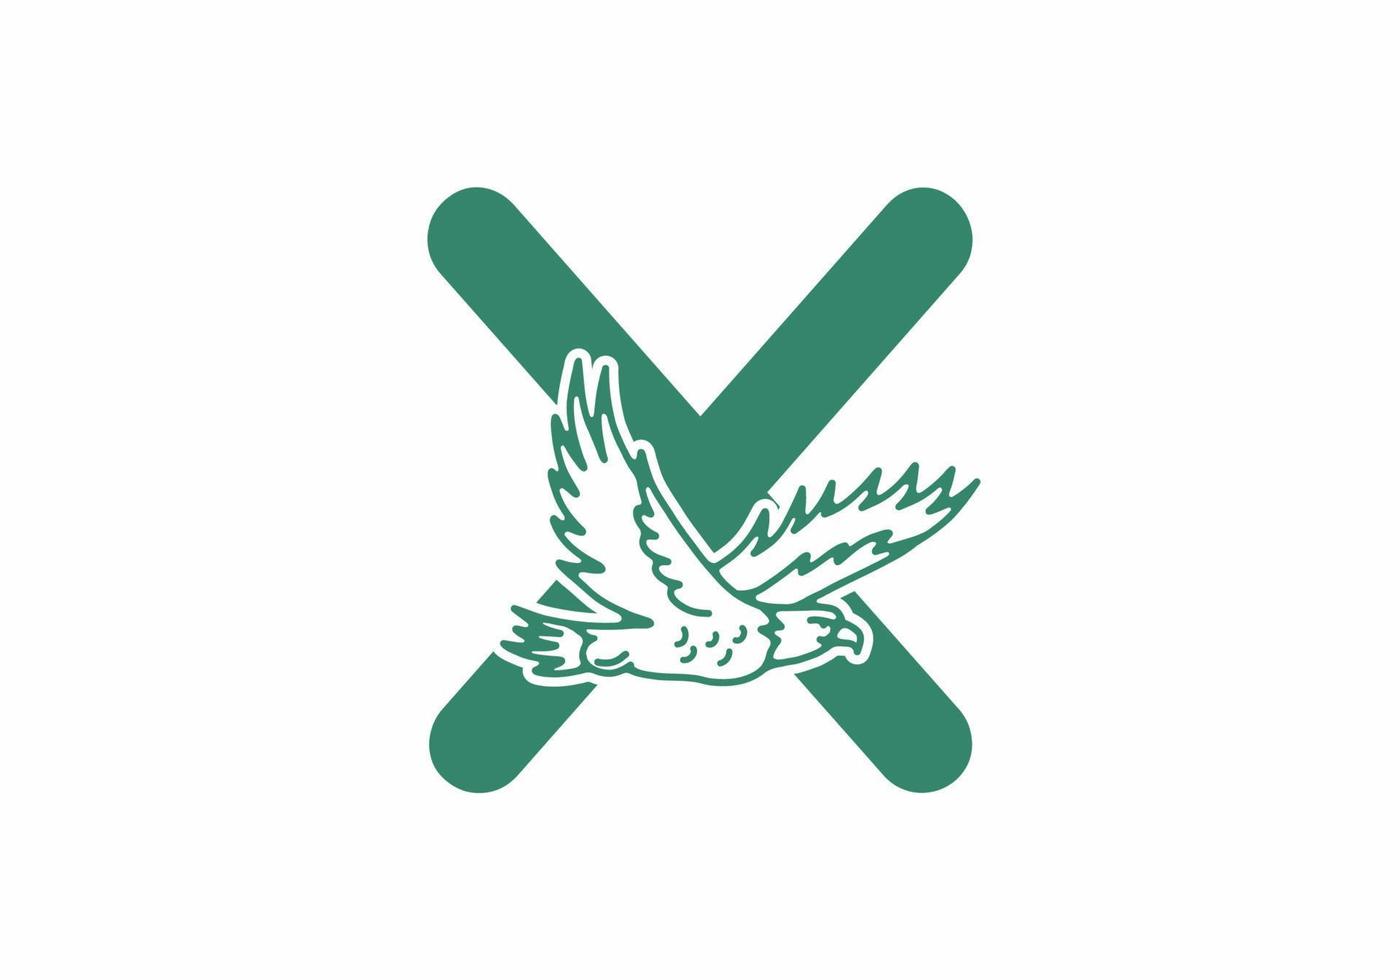 ilustración de arte lineal de águila voladora con letra inicial x vector